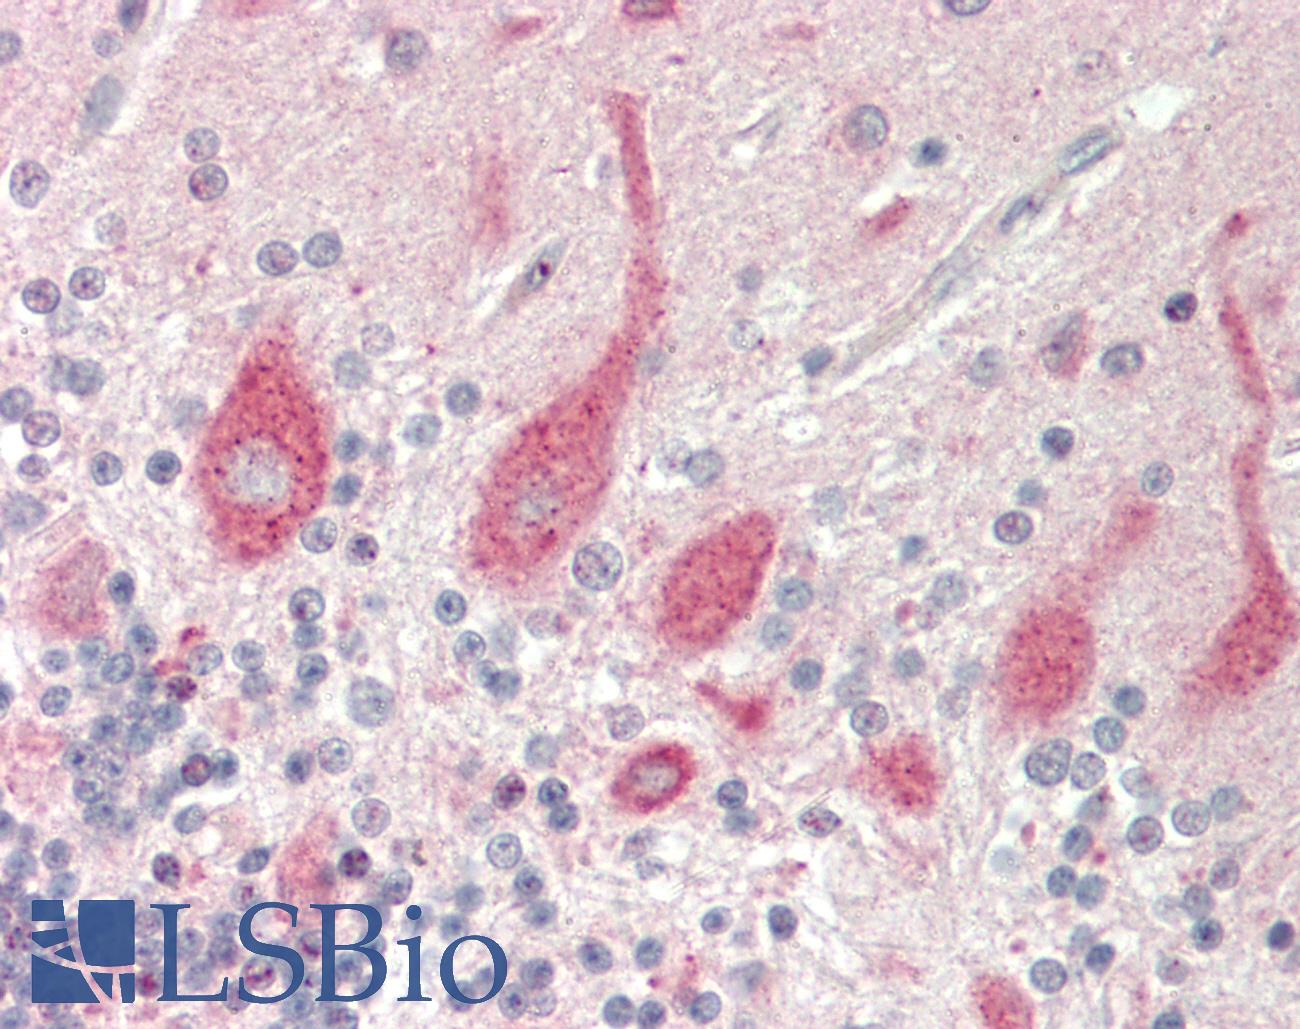 GNAL Antibody - Human Brain, Cerebellum: Formalin-Fixed, Paraffin-Embedded (FFPE)